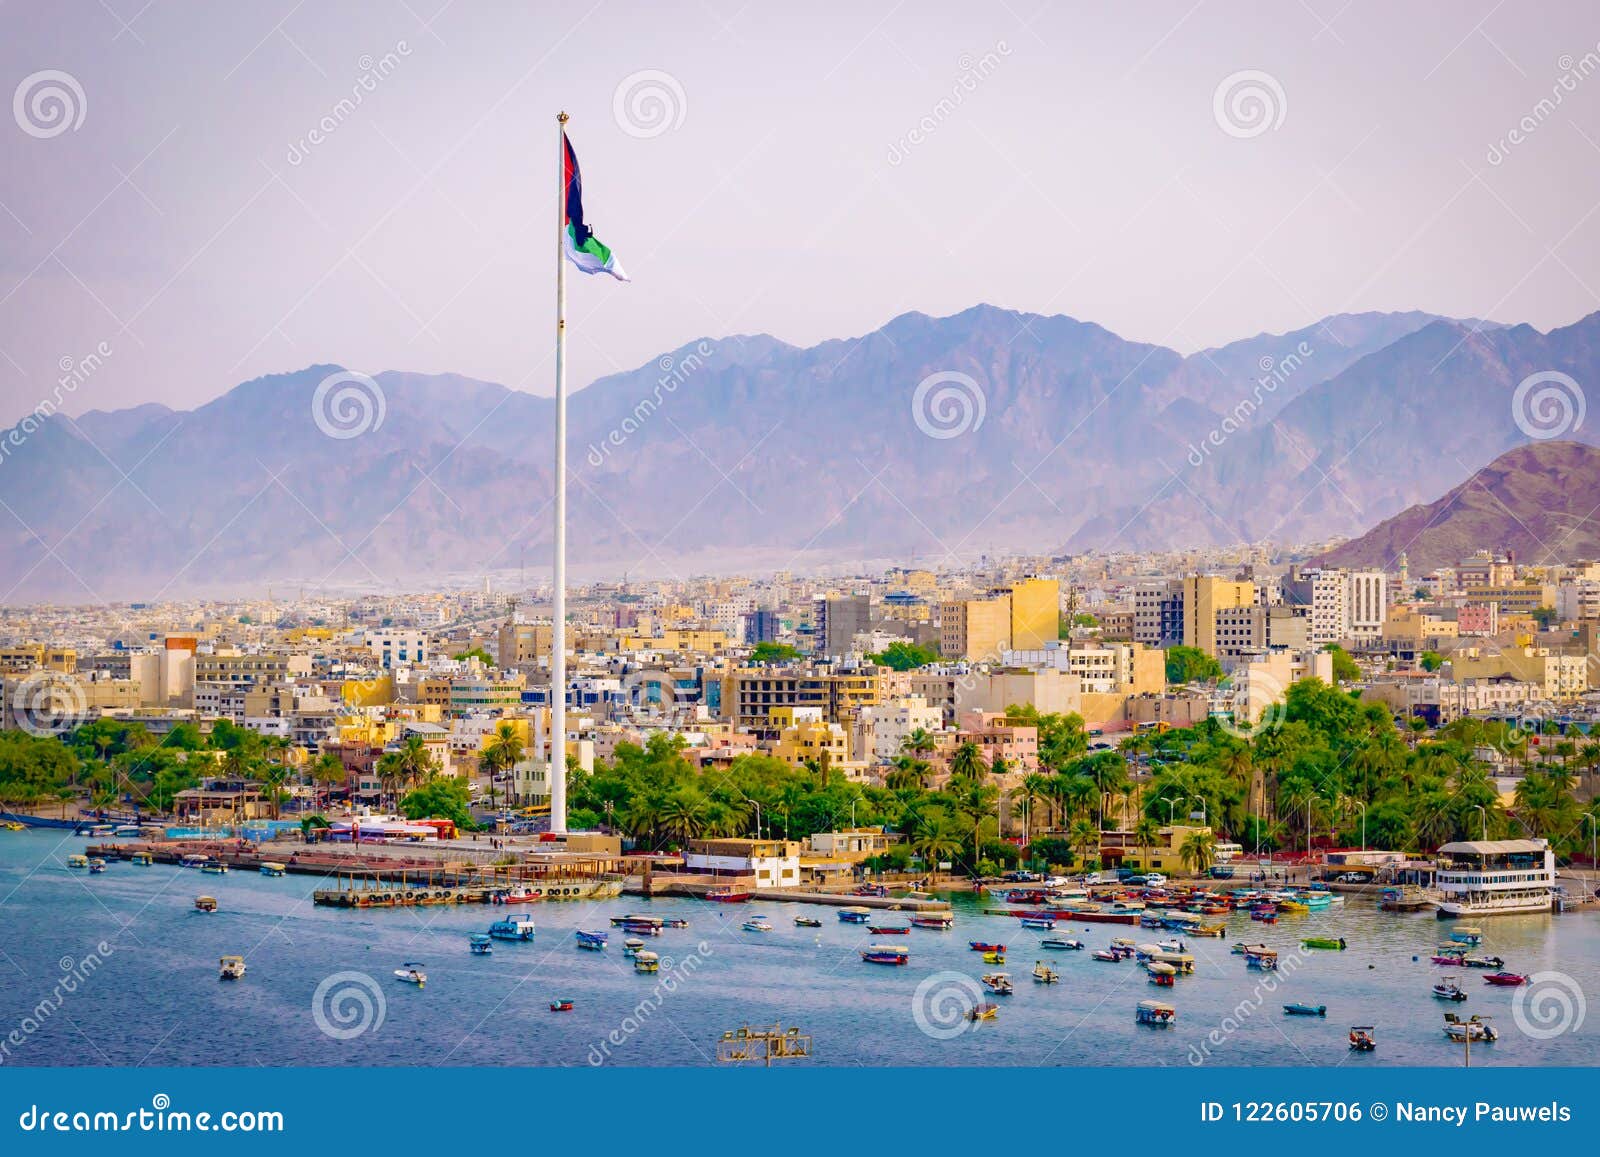 of Aqaba, Jordan stock of city, colorful - 122605706